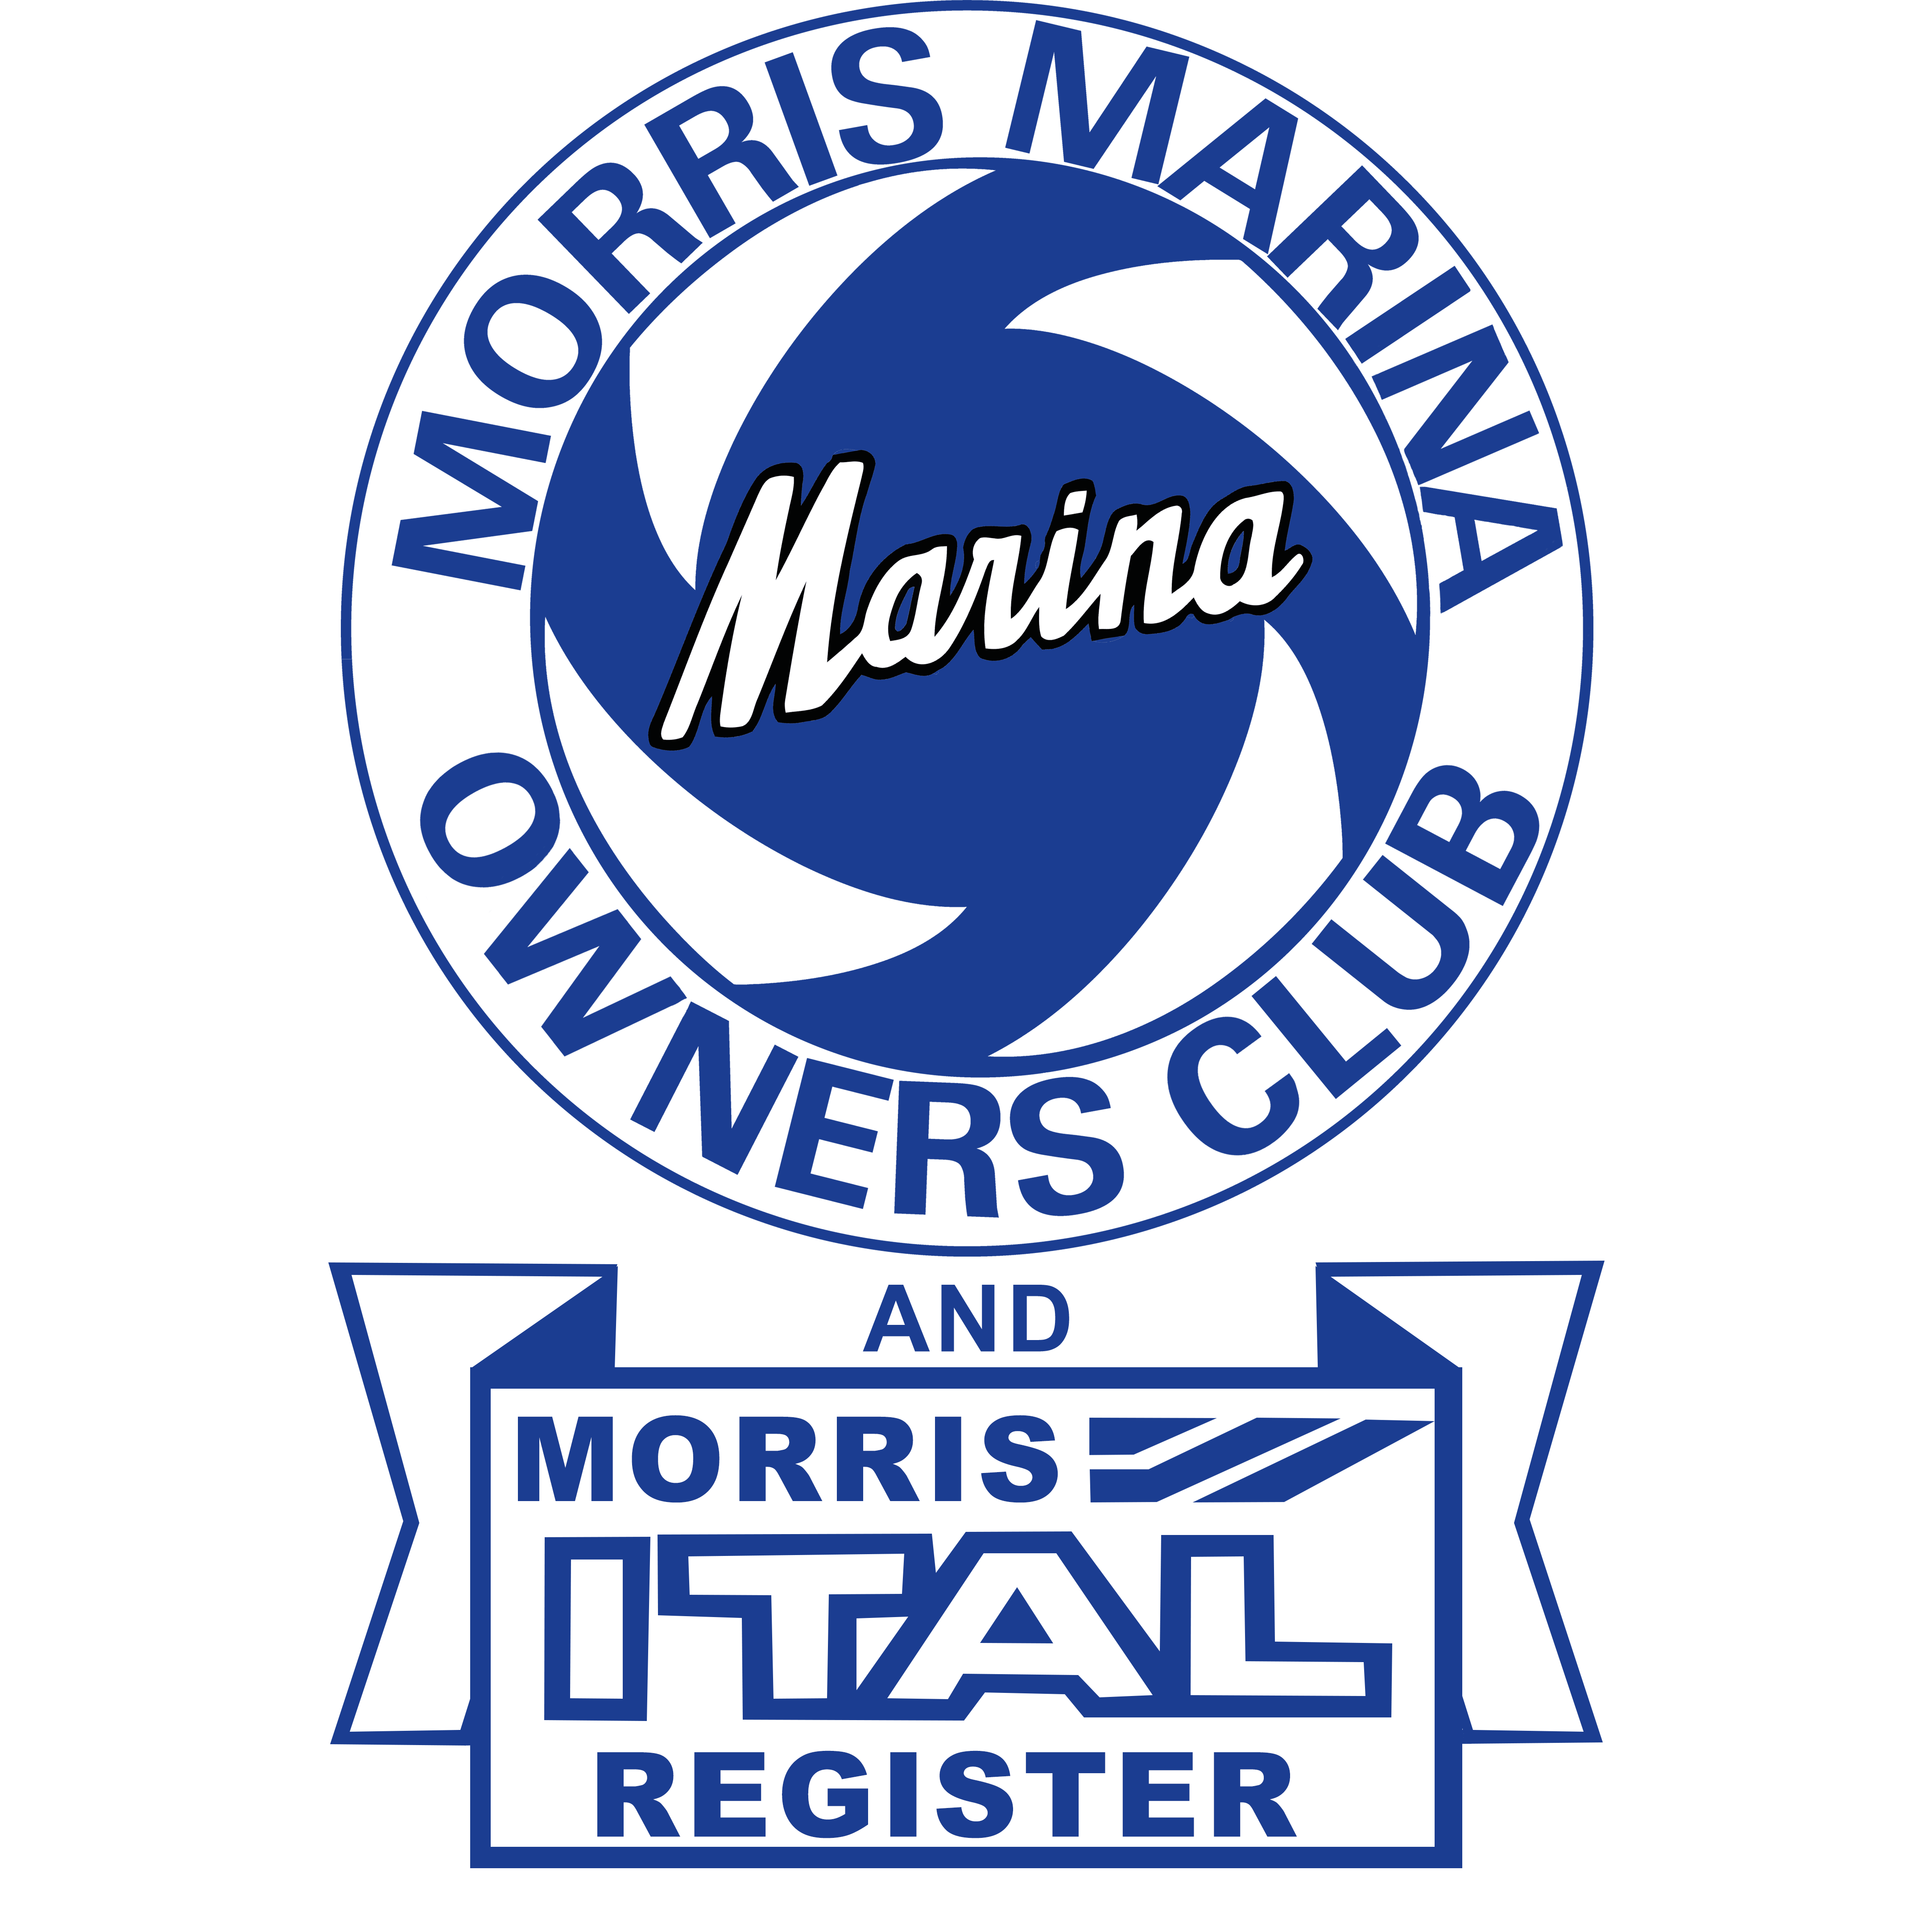 Morris Marina and Ital Register Evoke Classics Owners Club listings